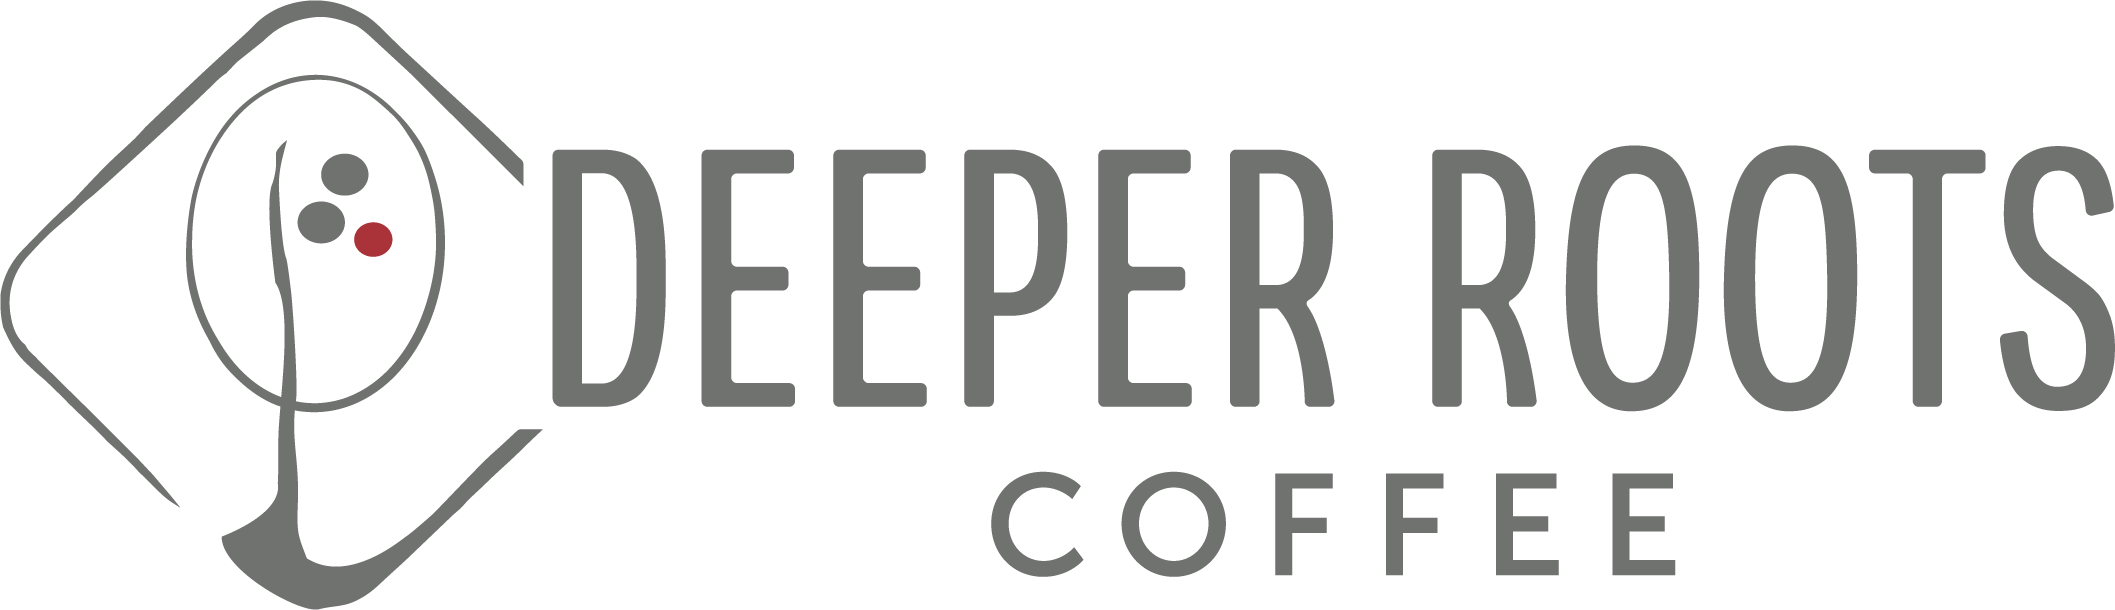 deeper roots coffee discount code